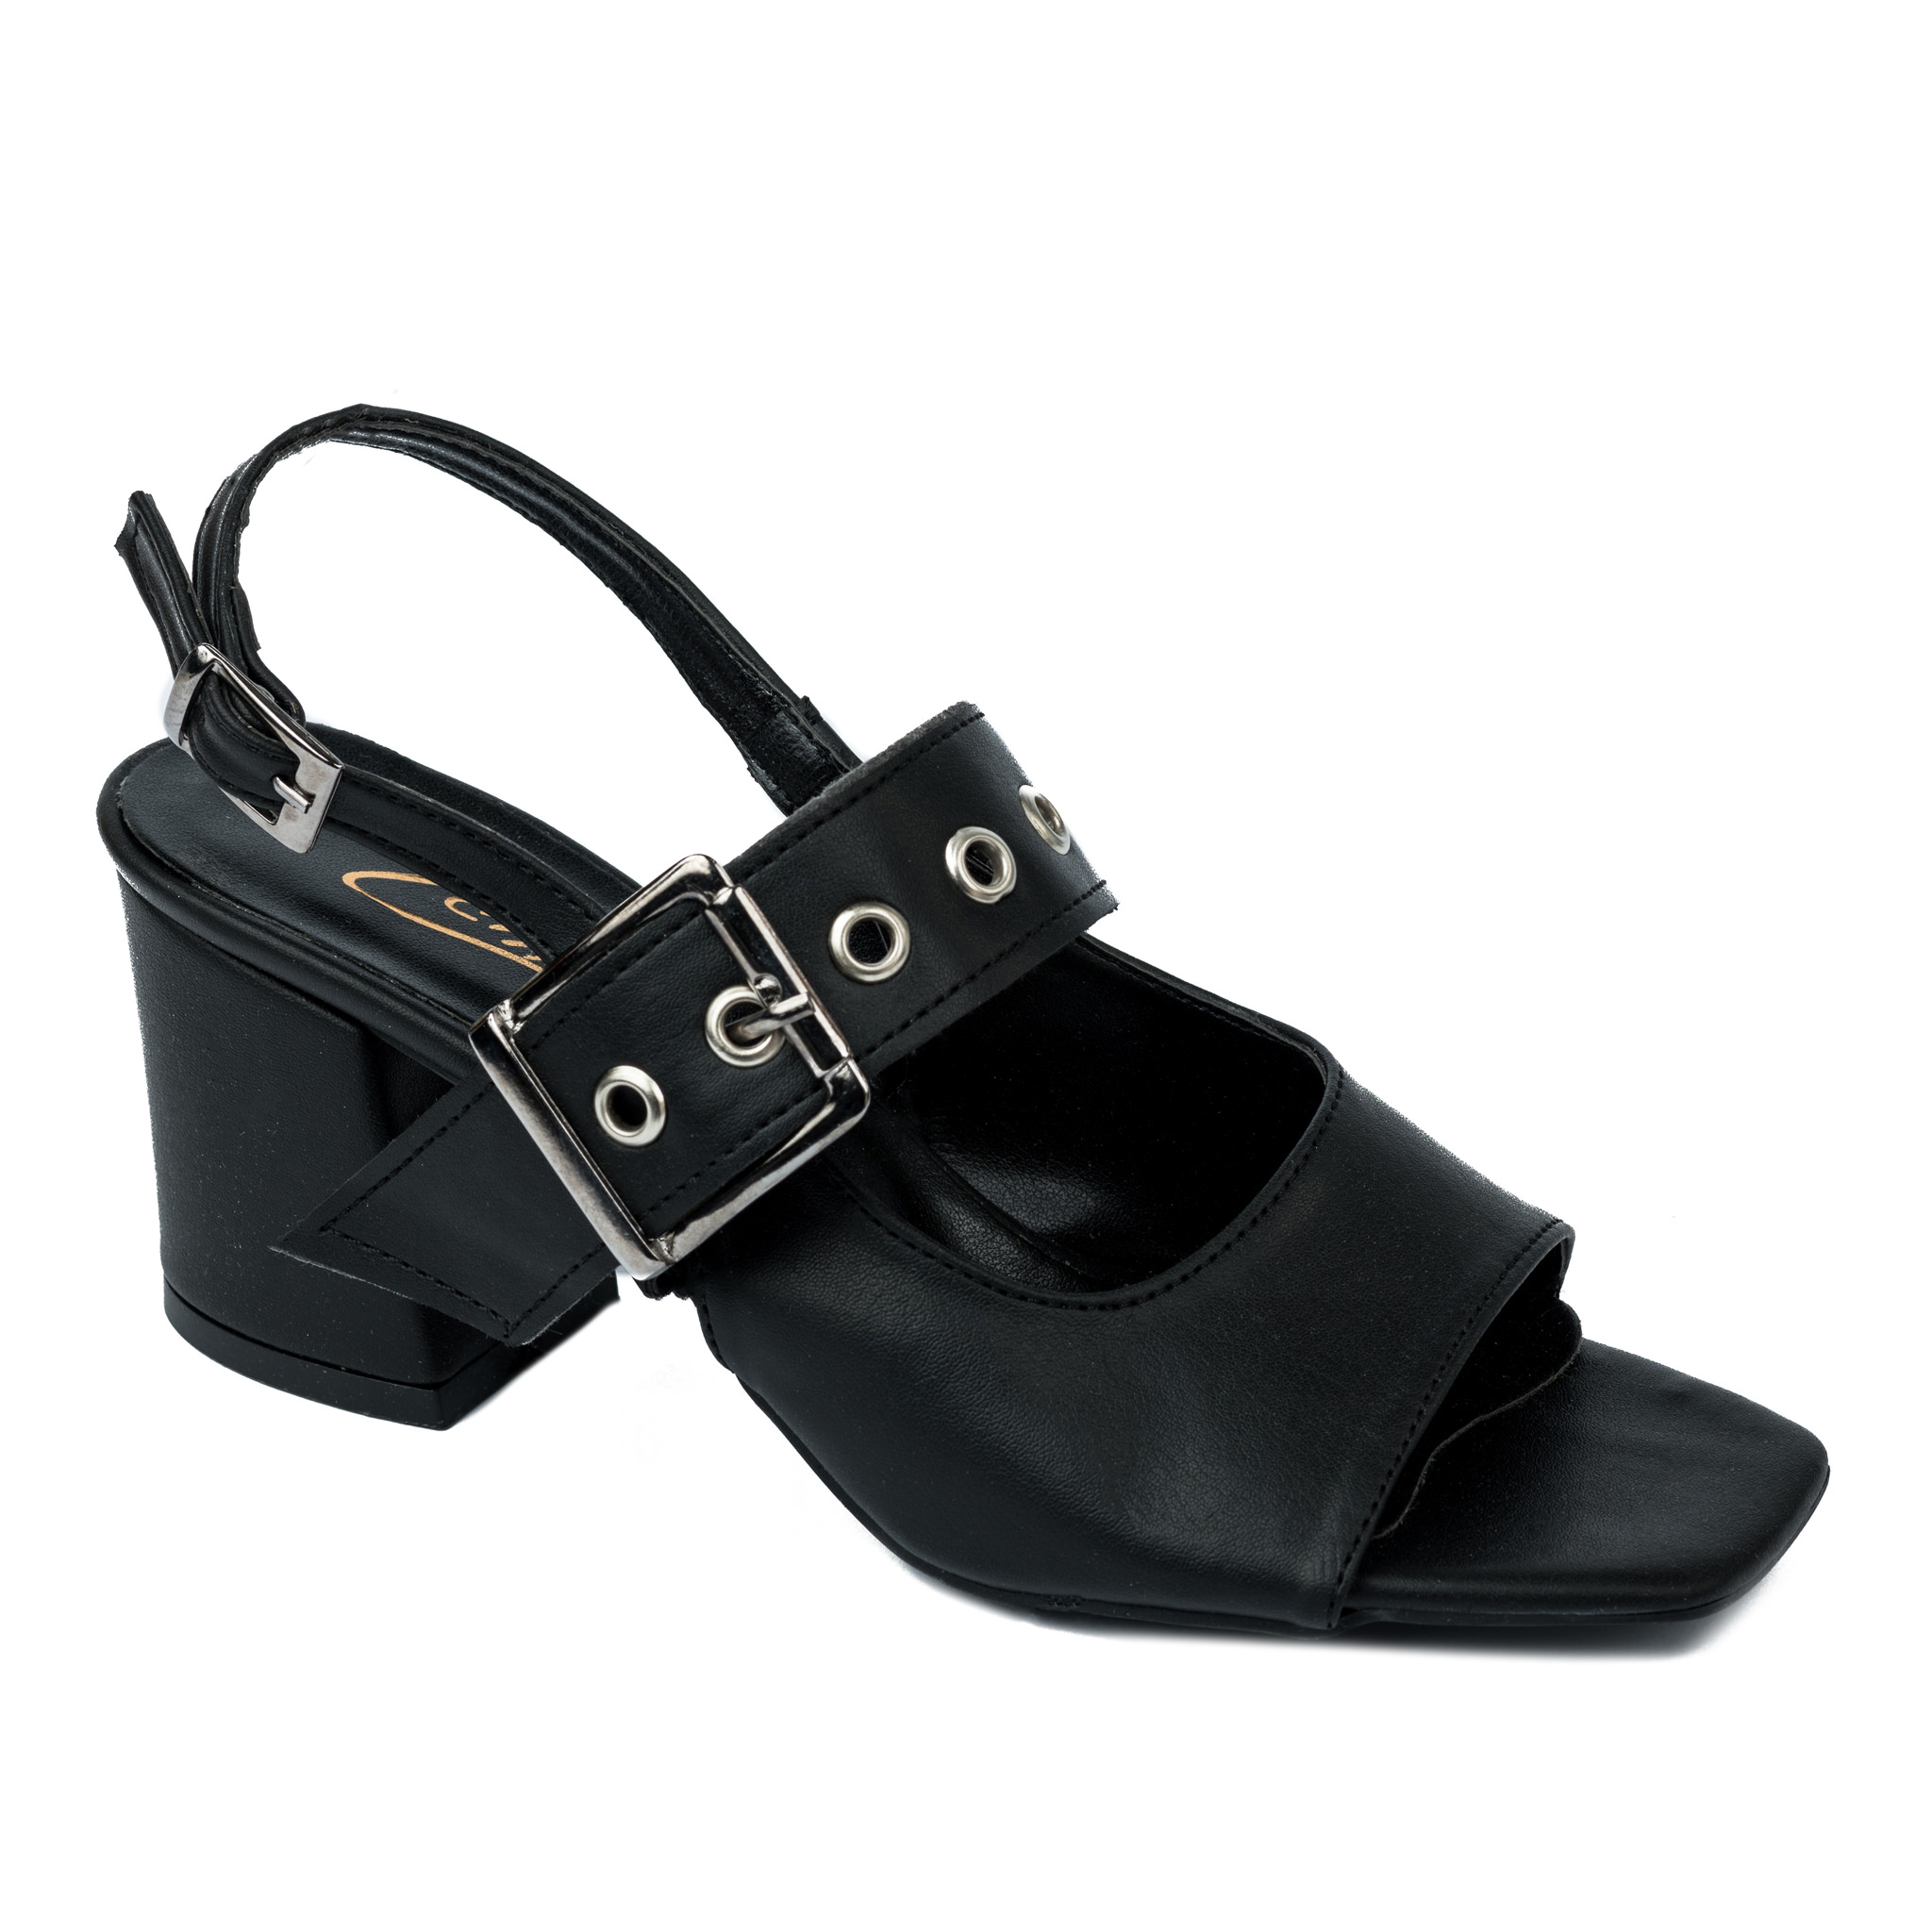 Women sandals A331 - BLACK